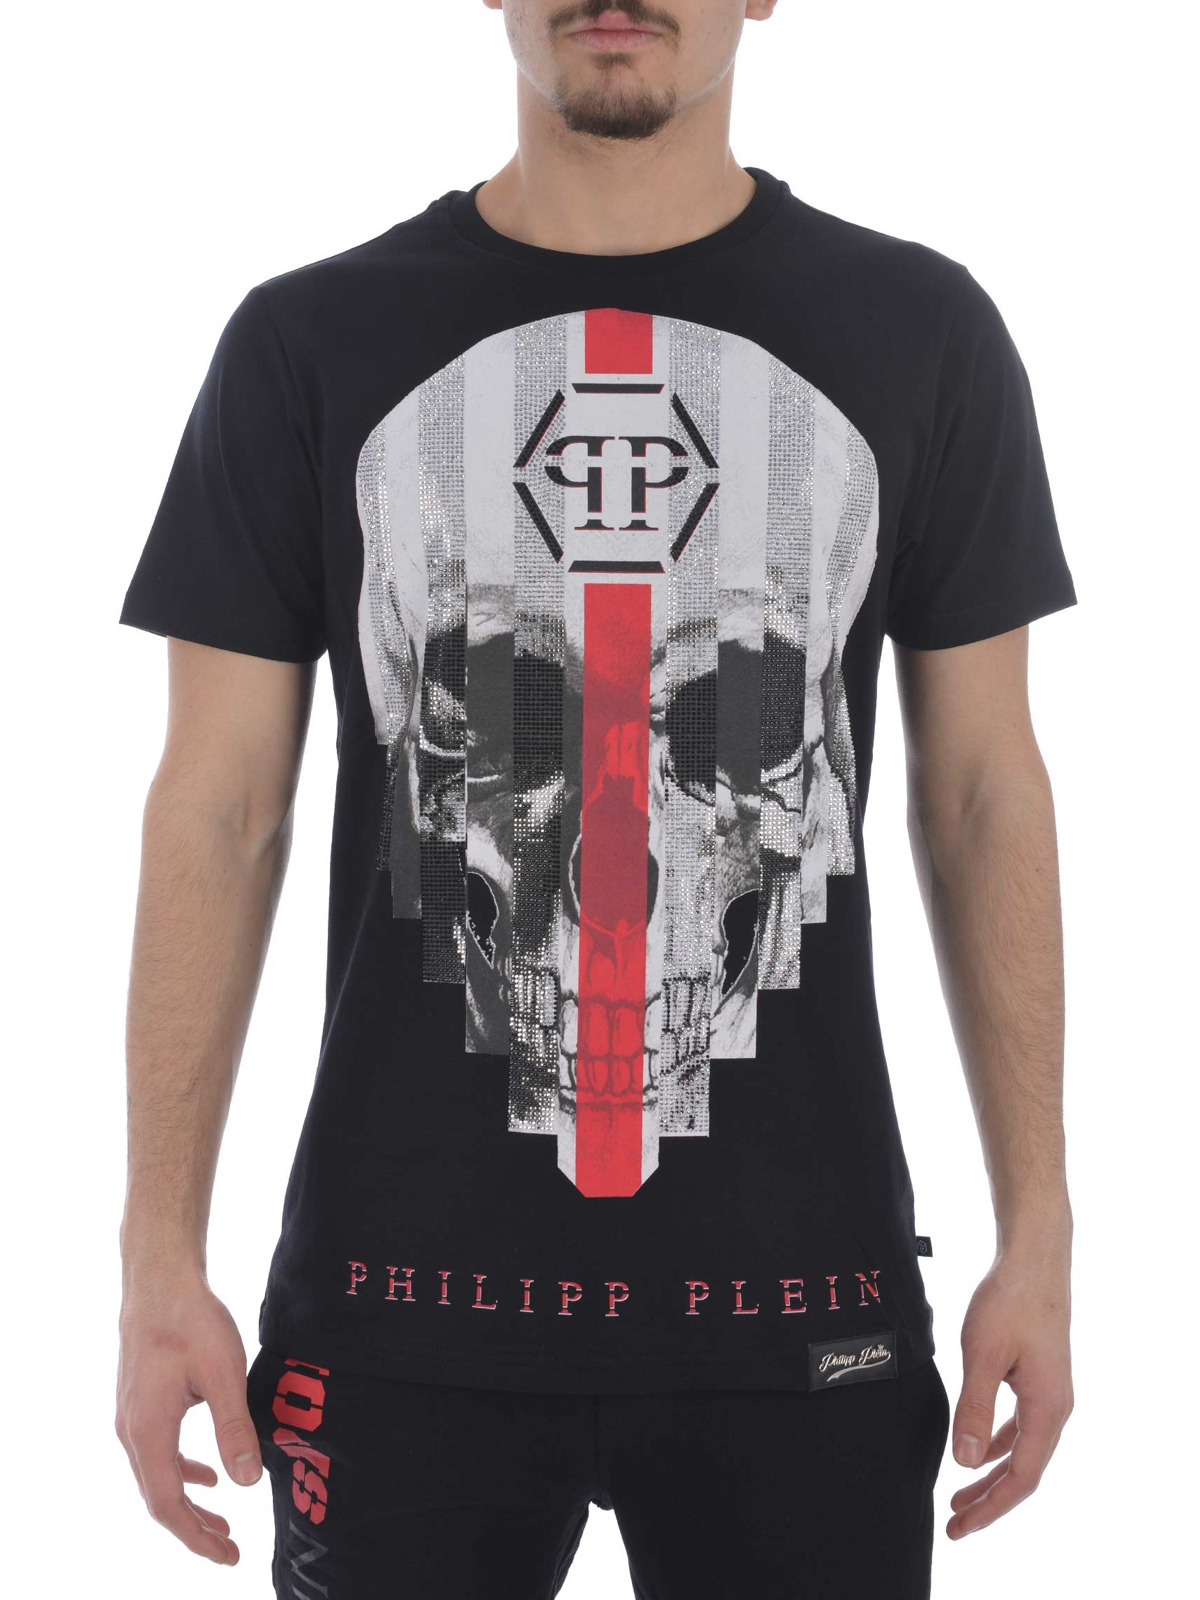 Buy > t shirt philipp plein homme > in stock